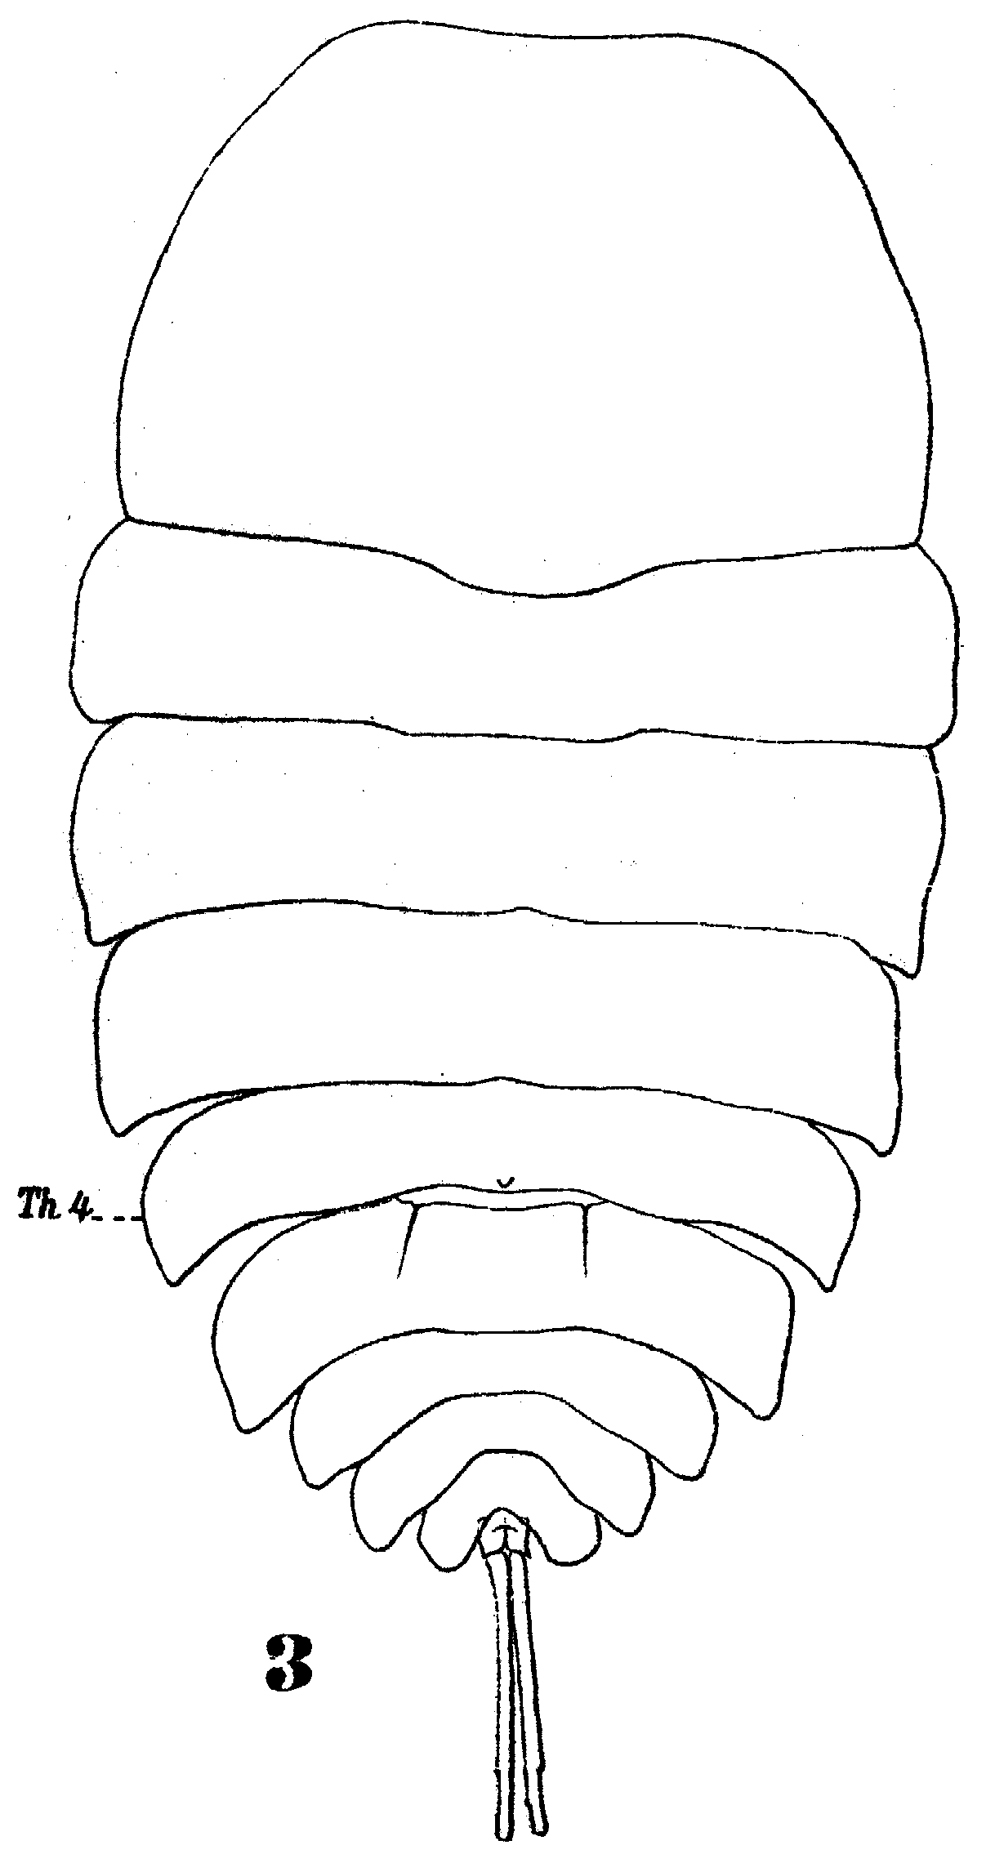 Species Copilia lata - Plate 2 of morphological figures